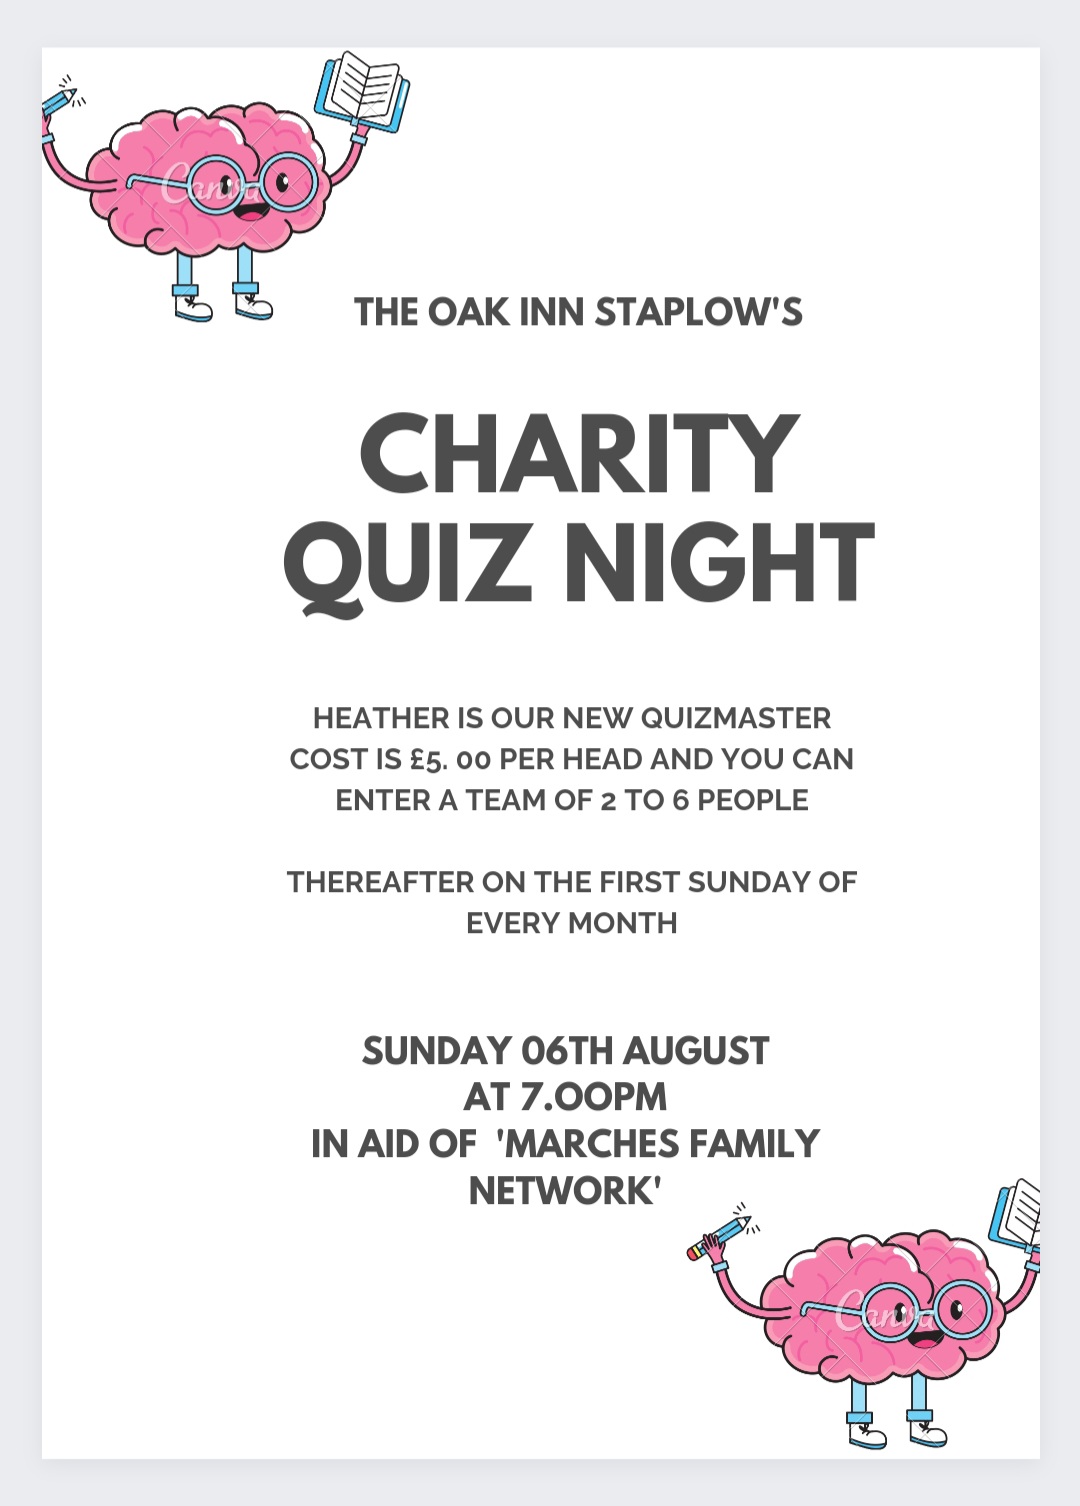 Charity Quiz at The Oak Inn Staplow Ledbury, Herefordshire